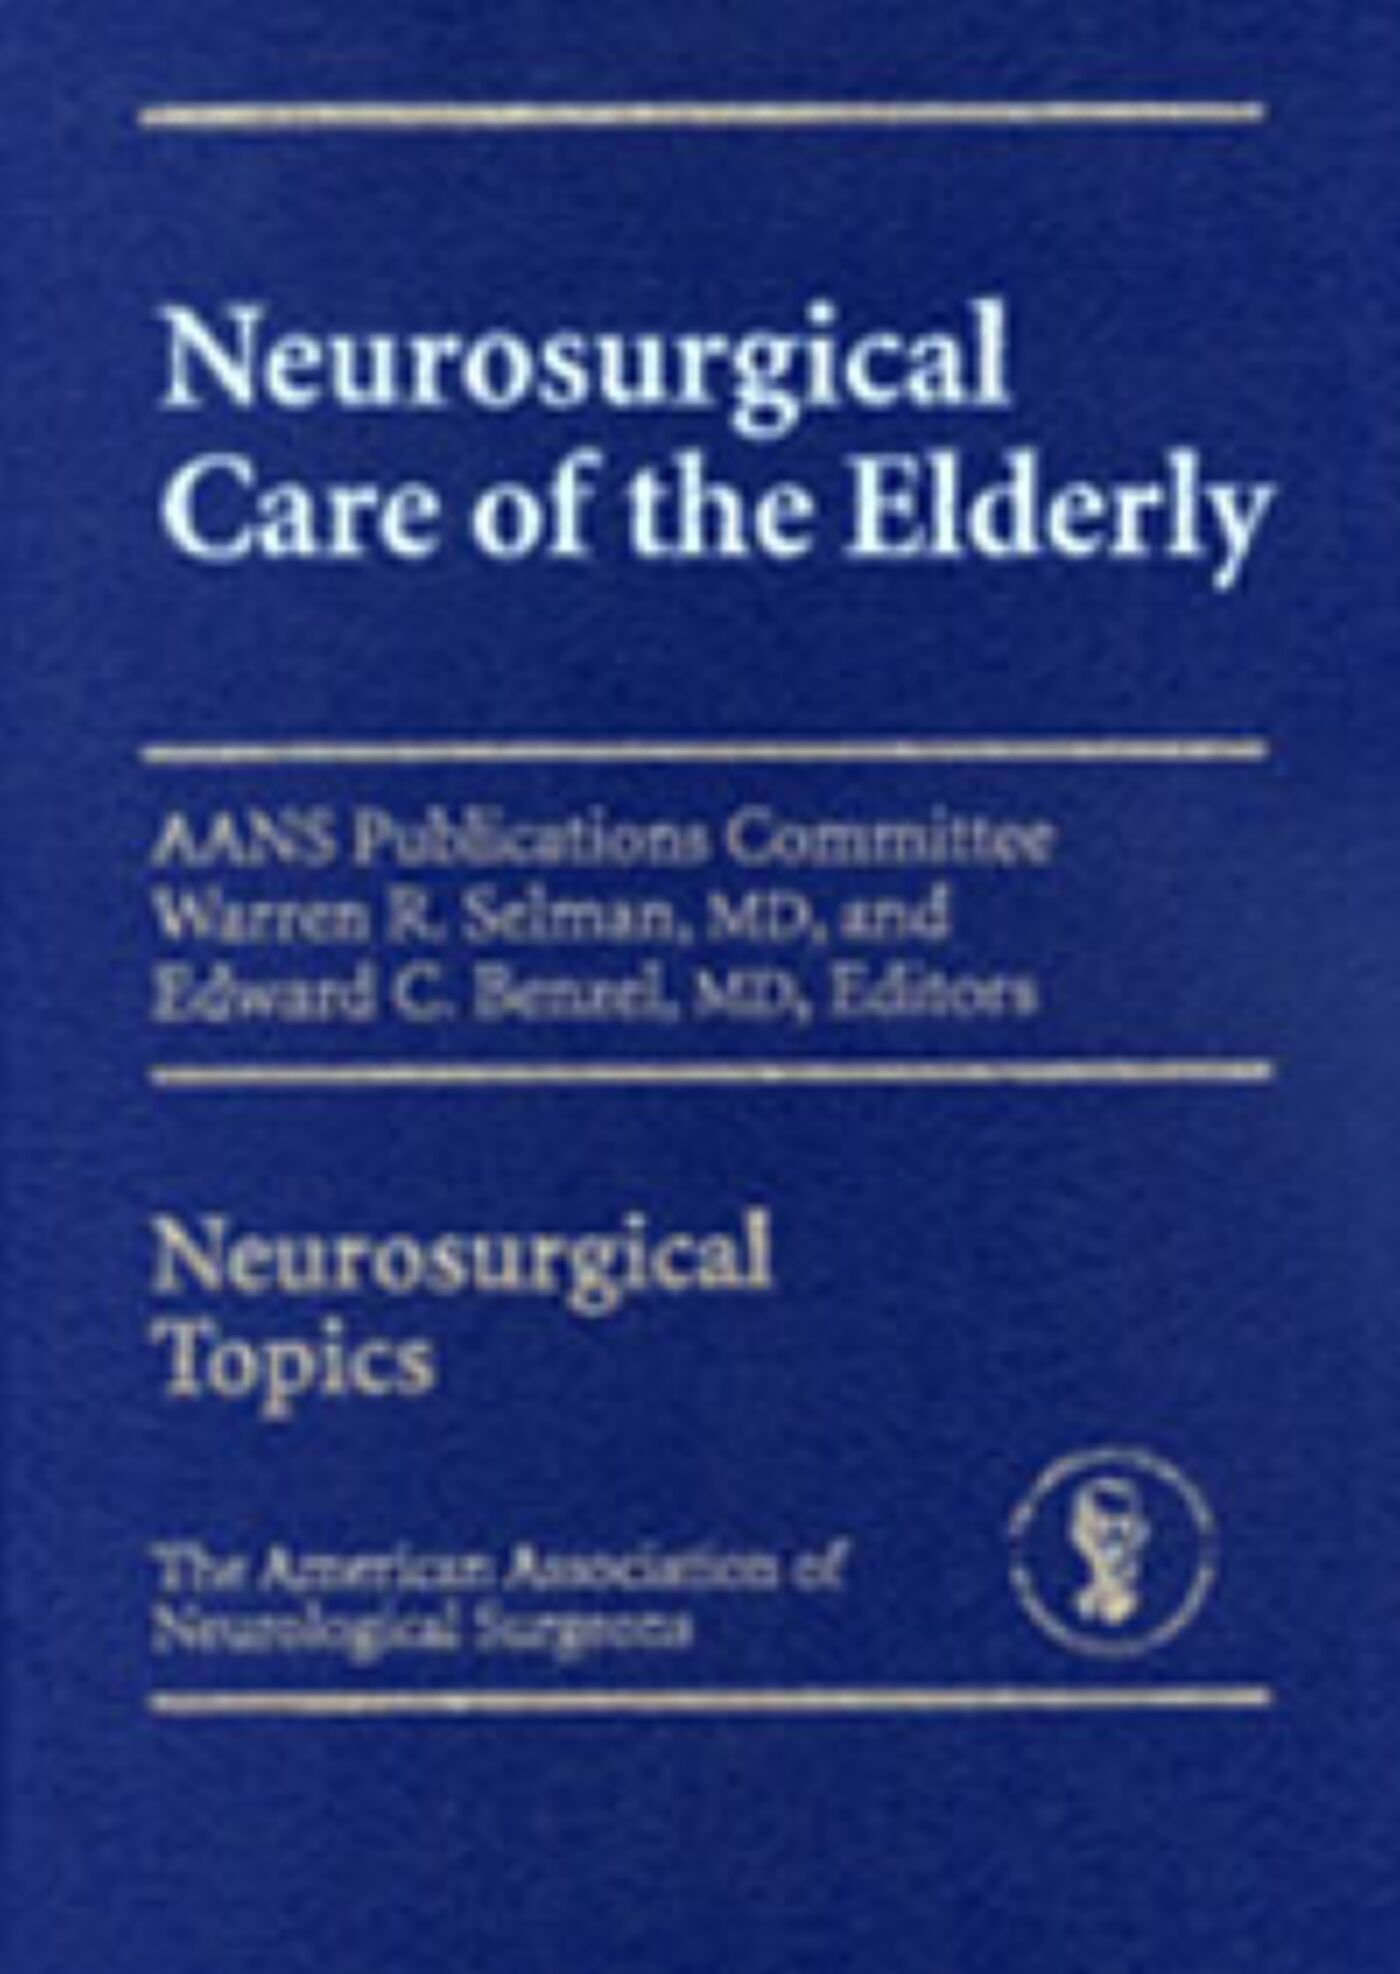 Neurosurgical Care of the Elderly, 9781879284593